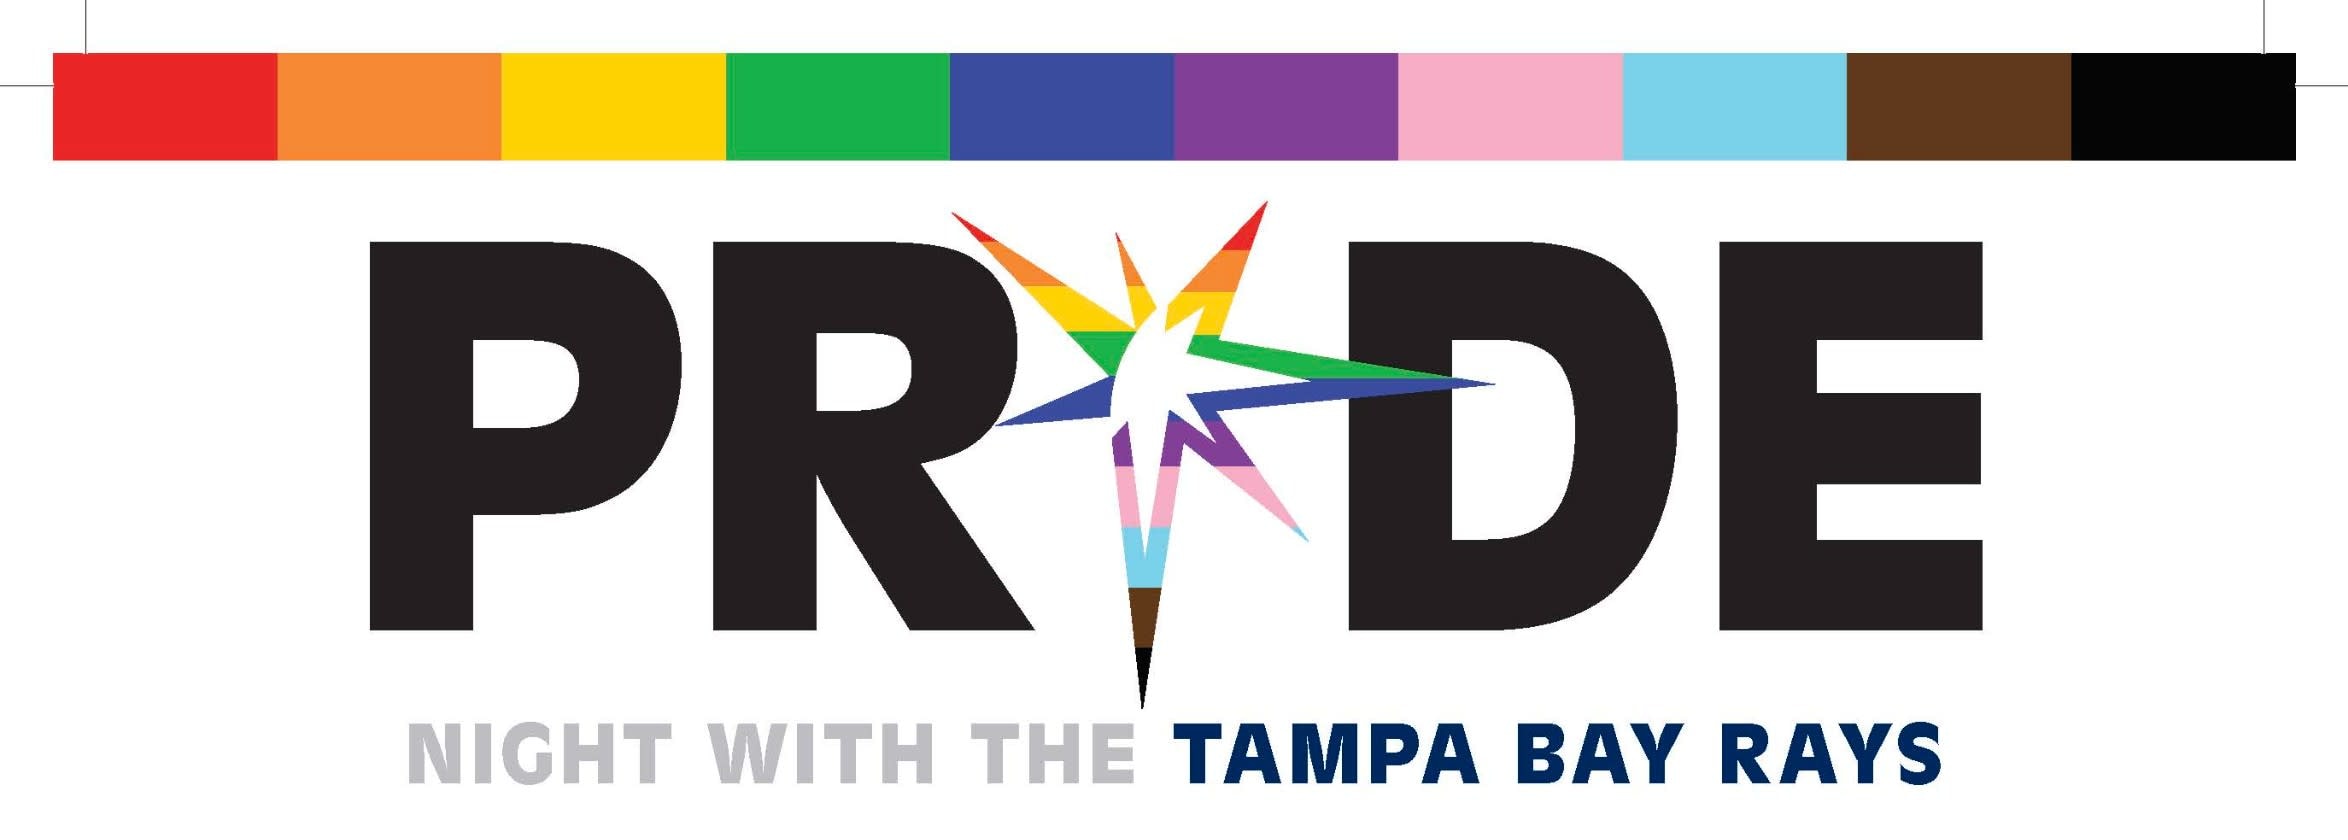 Tampa Bay Rays Pride Night GZ